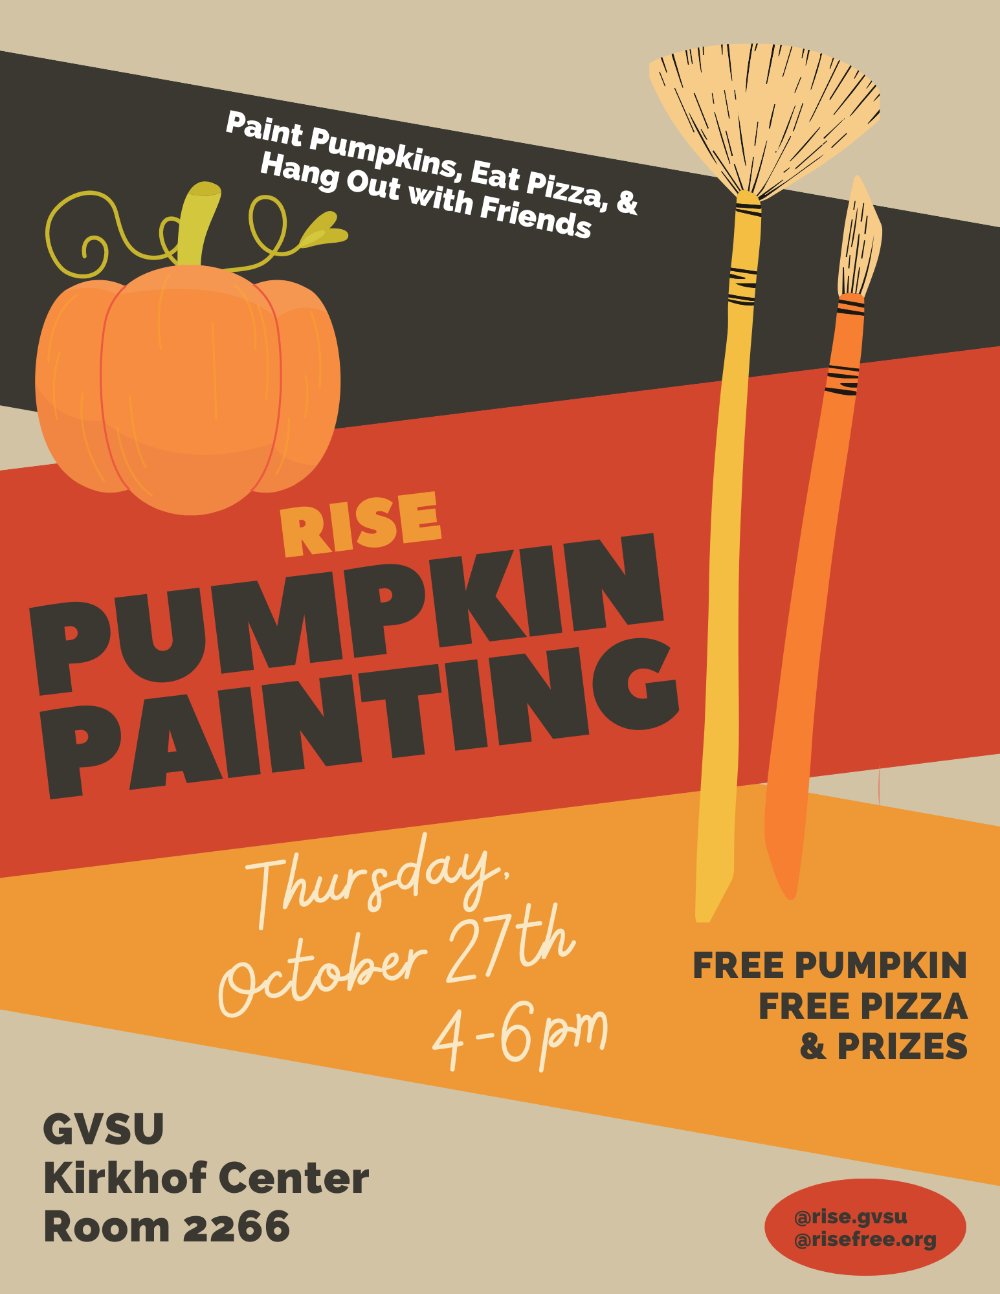 RISE pumpkin painting event flyer